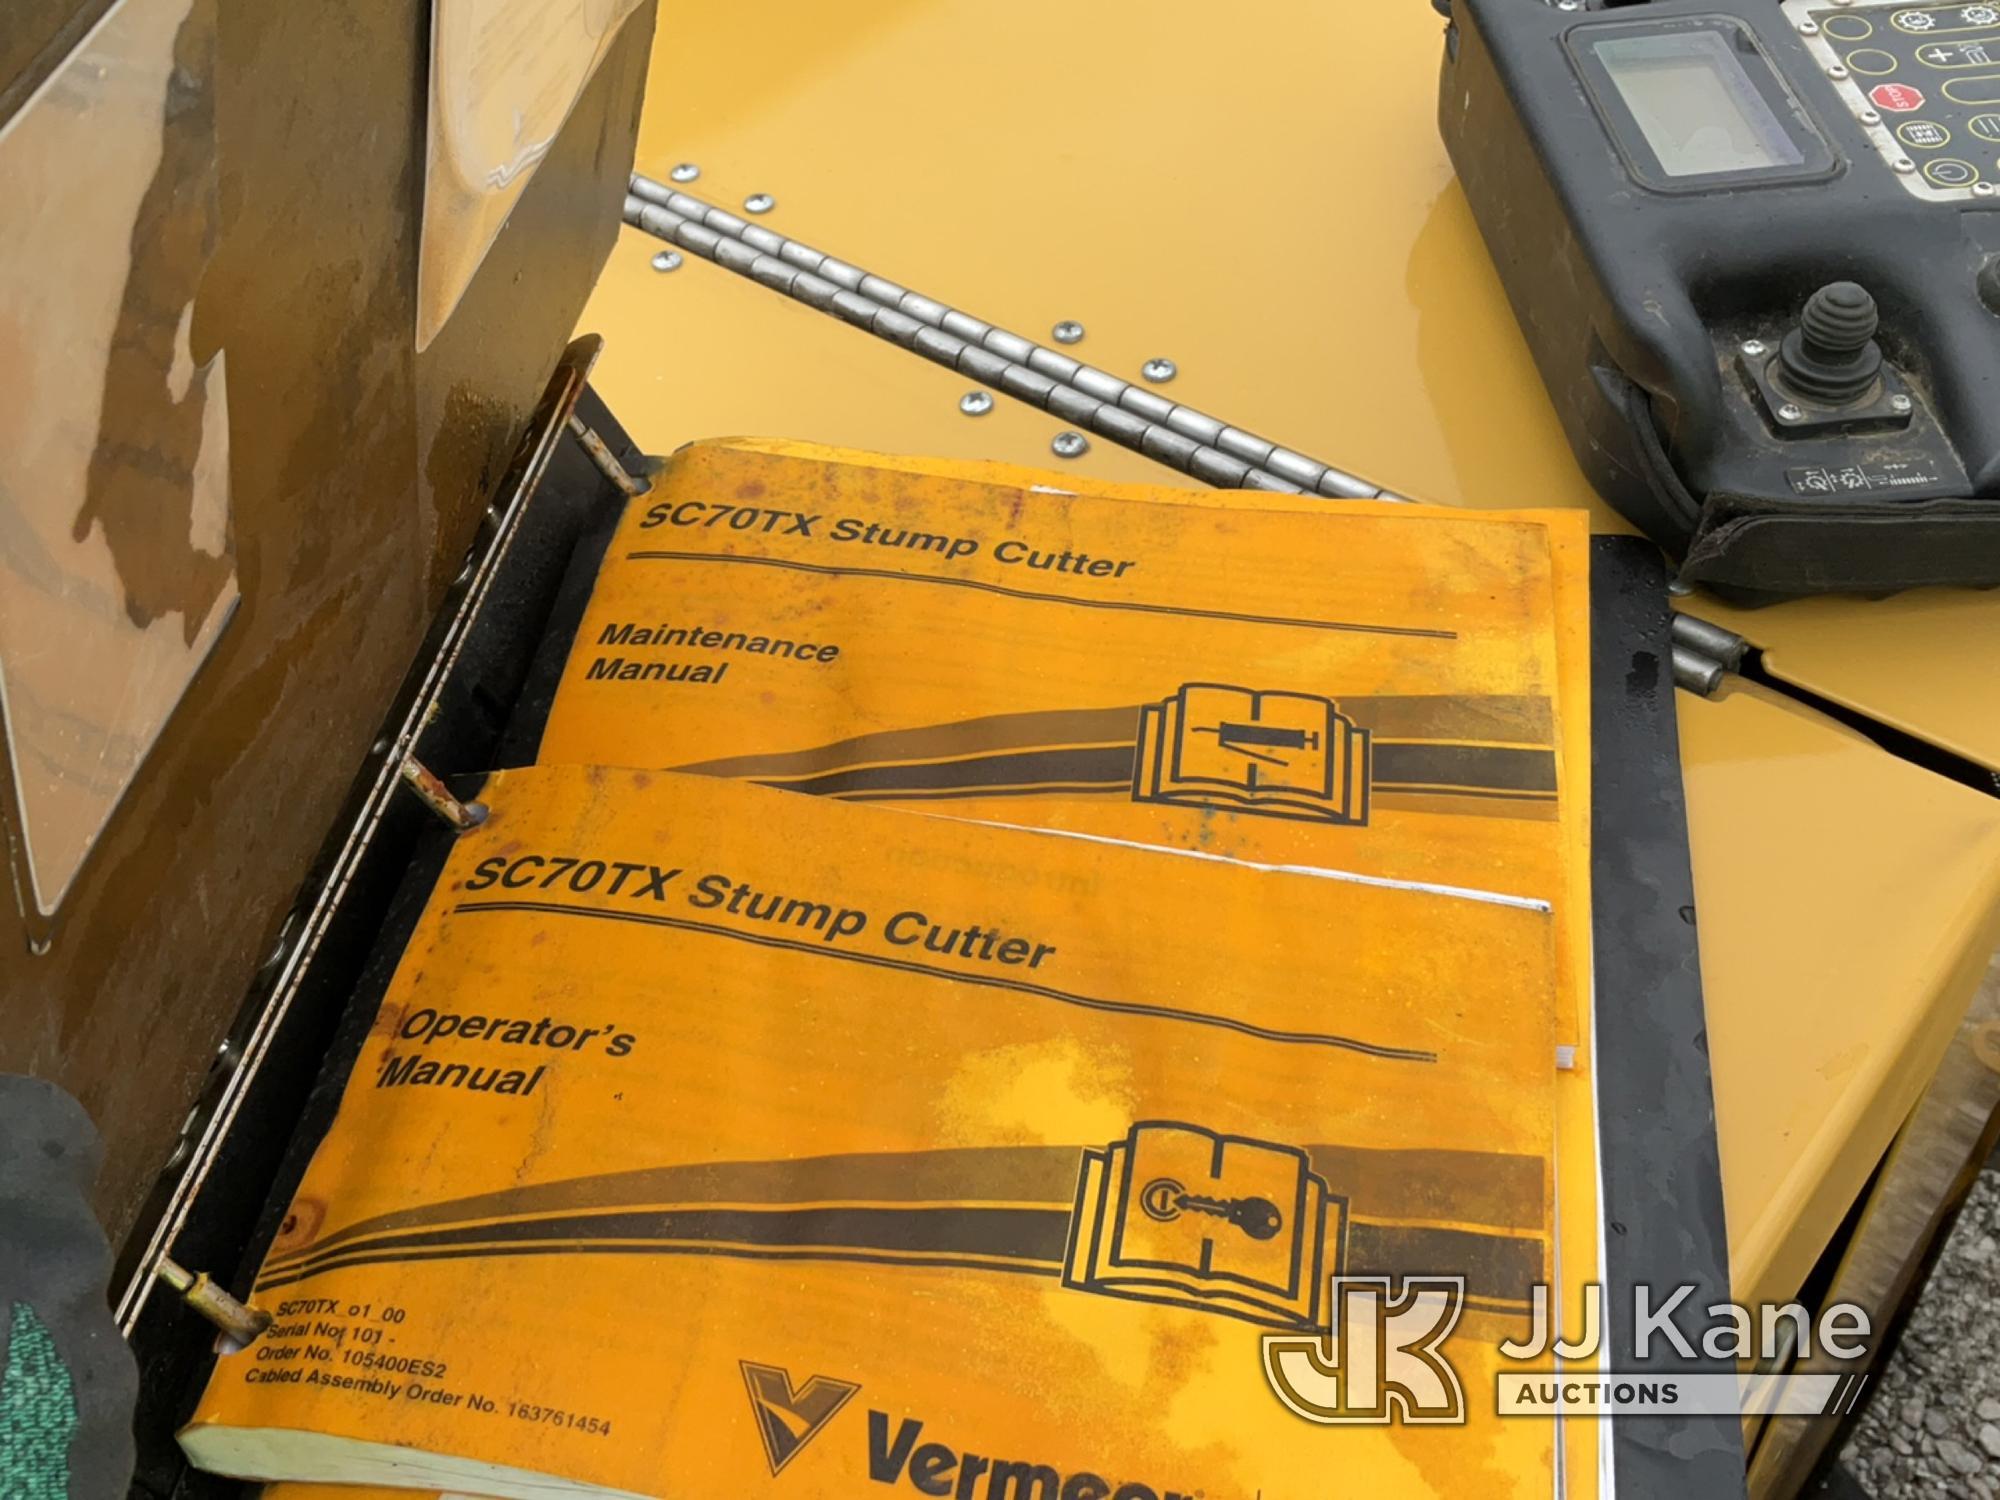 (Verona, KY) 2020 Vermeer SC70TX Walk-Beside Stump Grinder Runs, Moves & Operates per video)